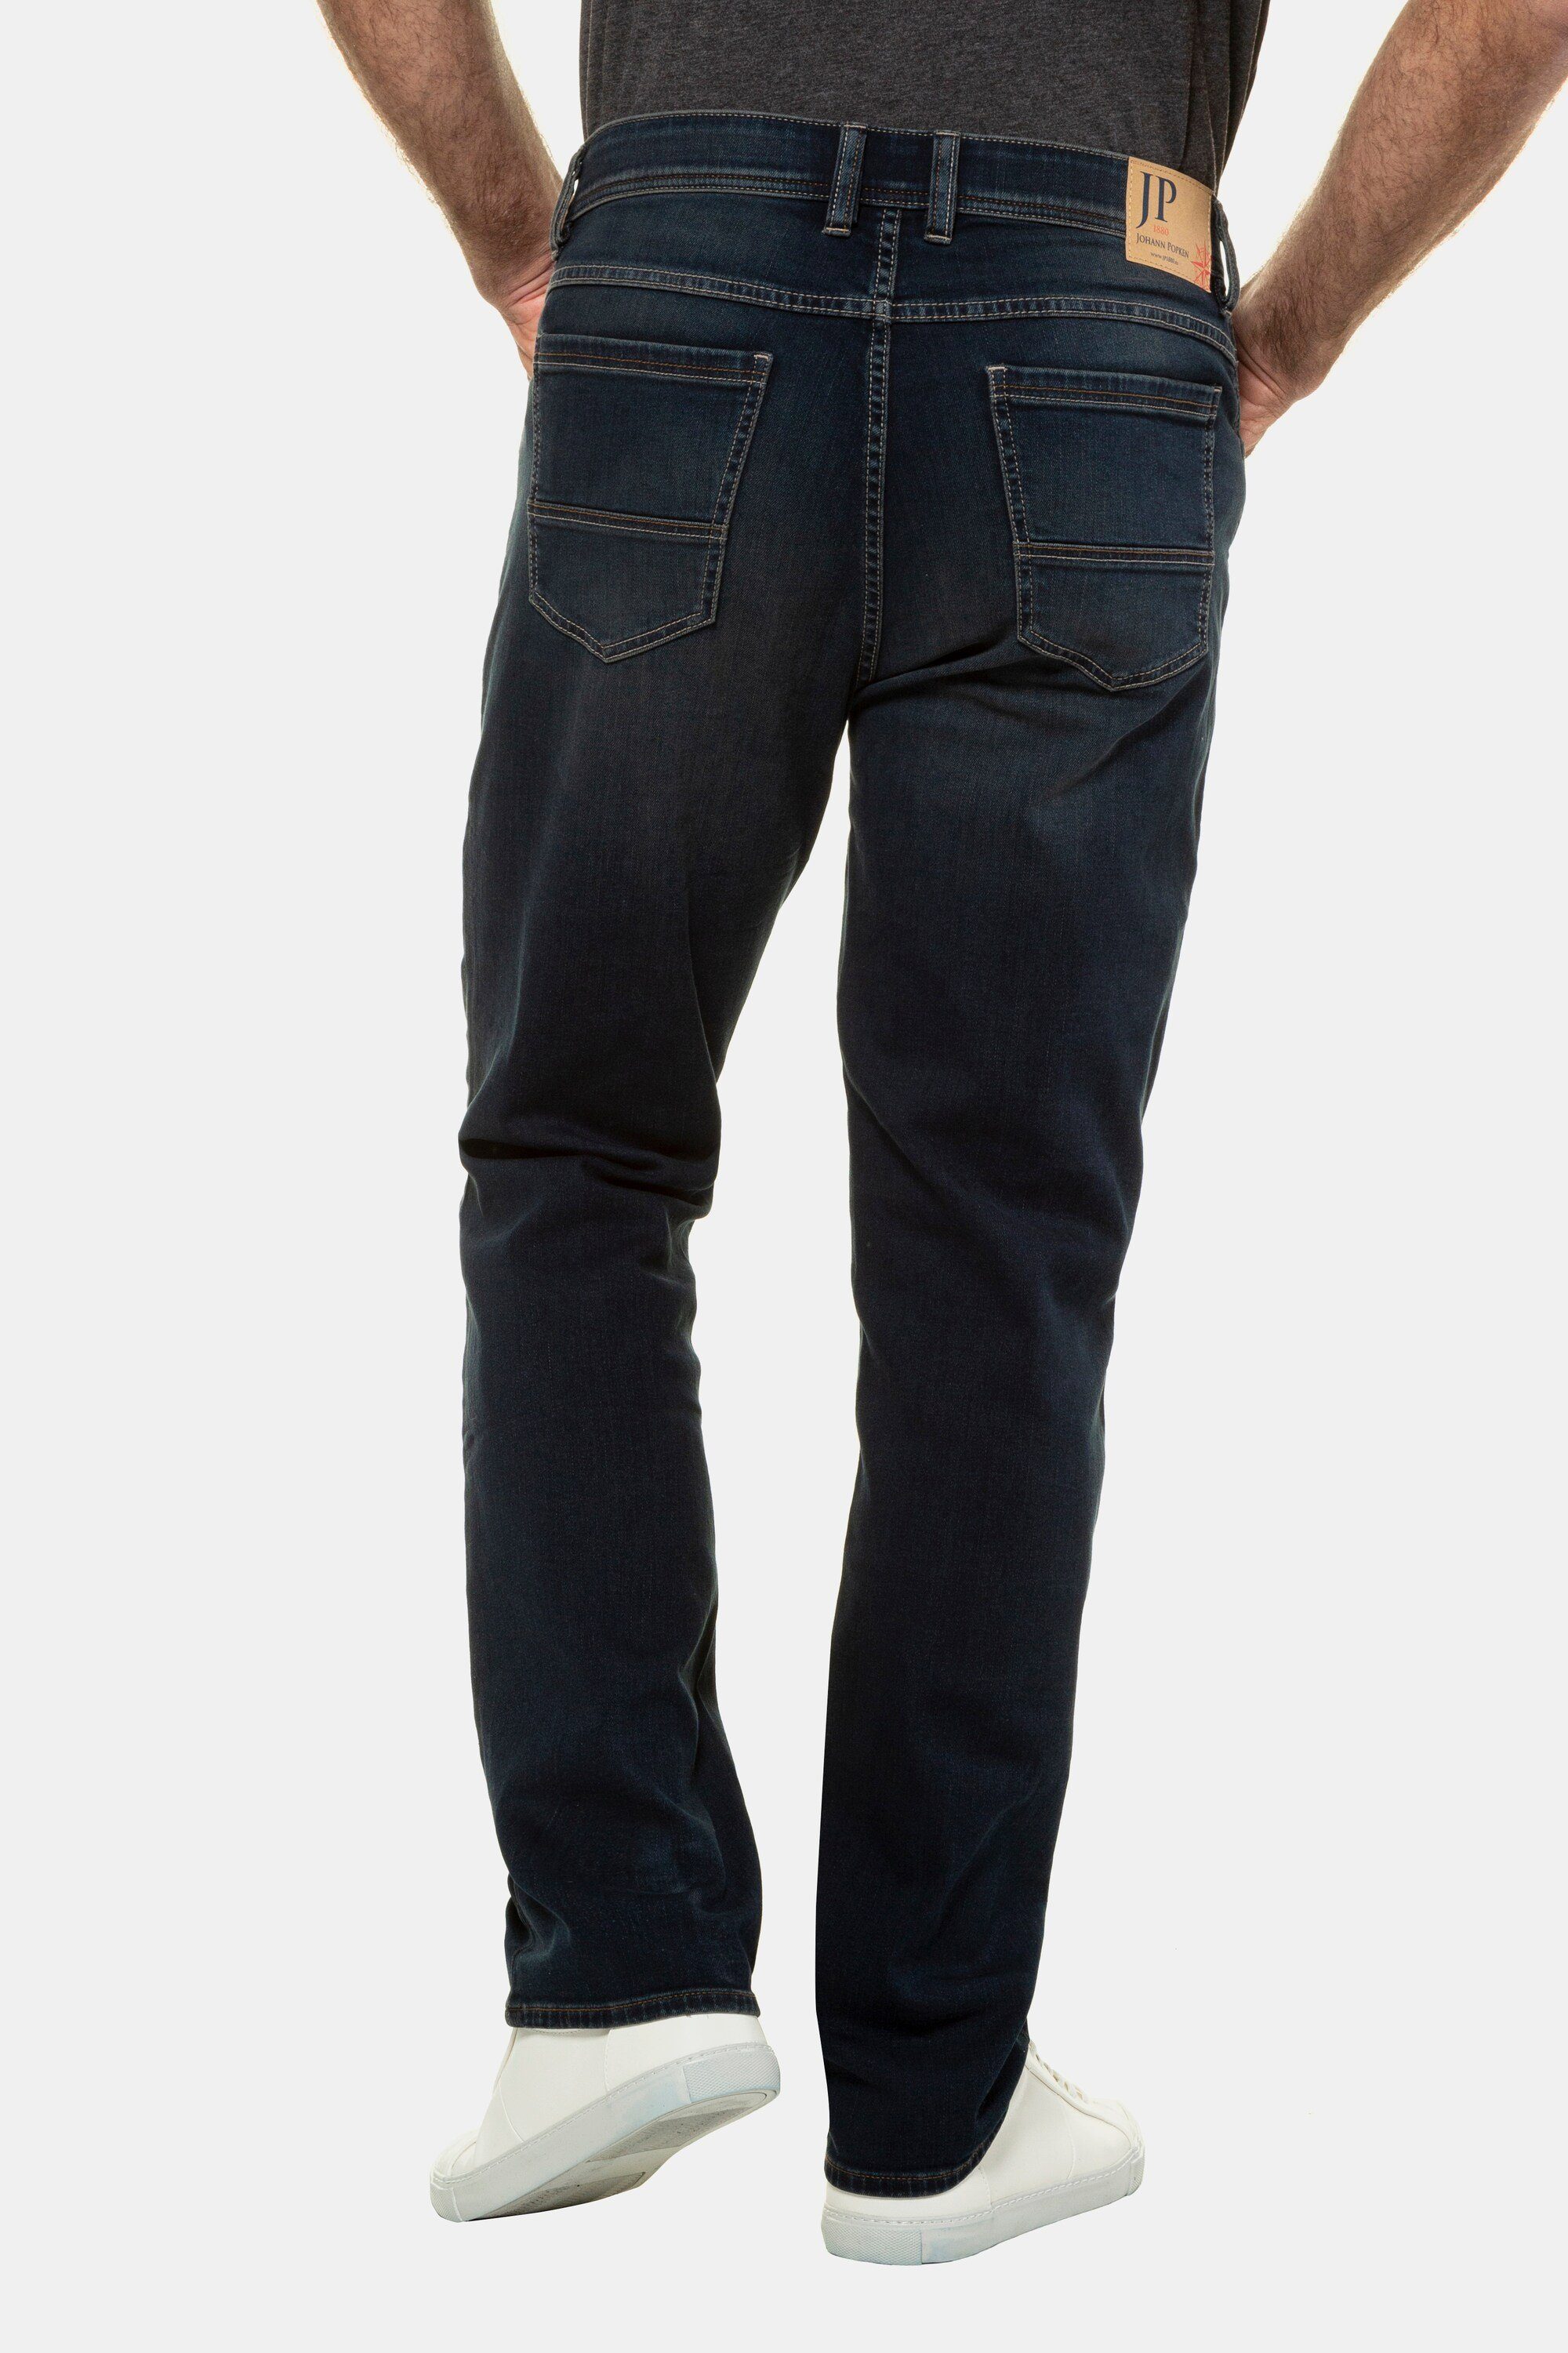 70/35 JP1880 denim bis Cargohose Denim Jeans blue Bauchfit Gr.